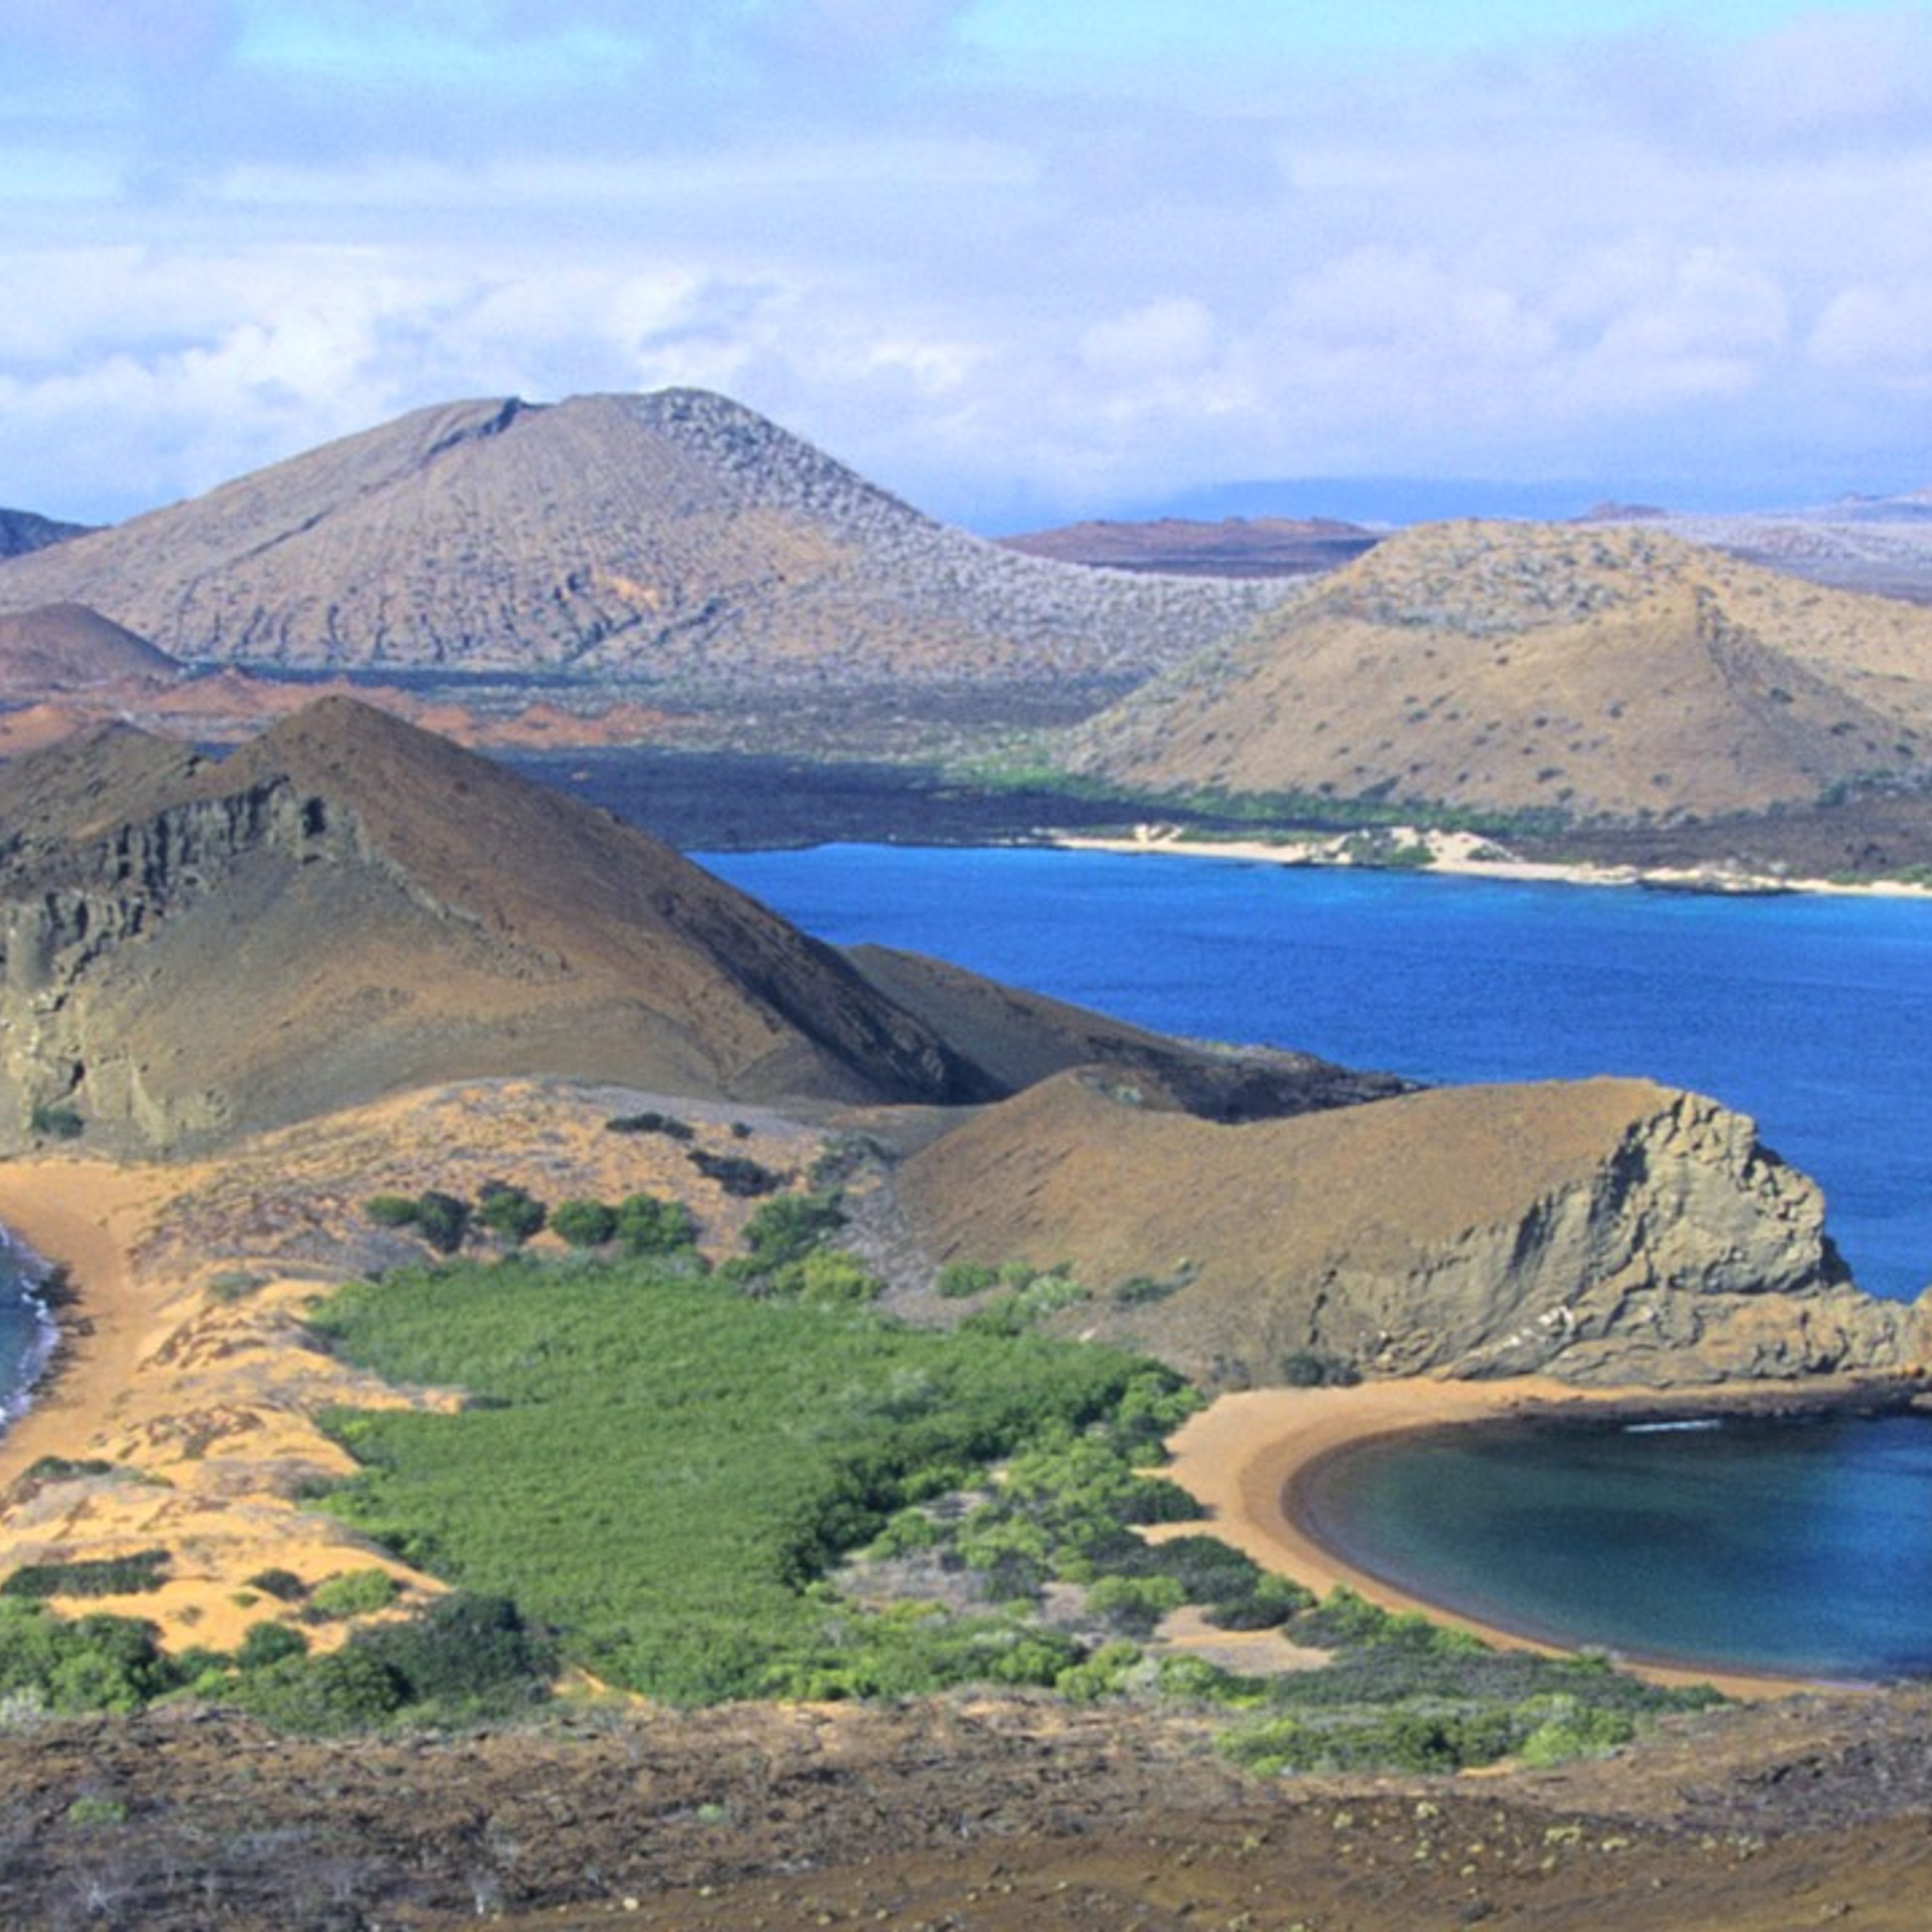 Voyage aux Iles Galapagos